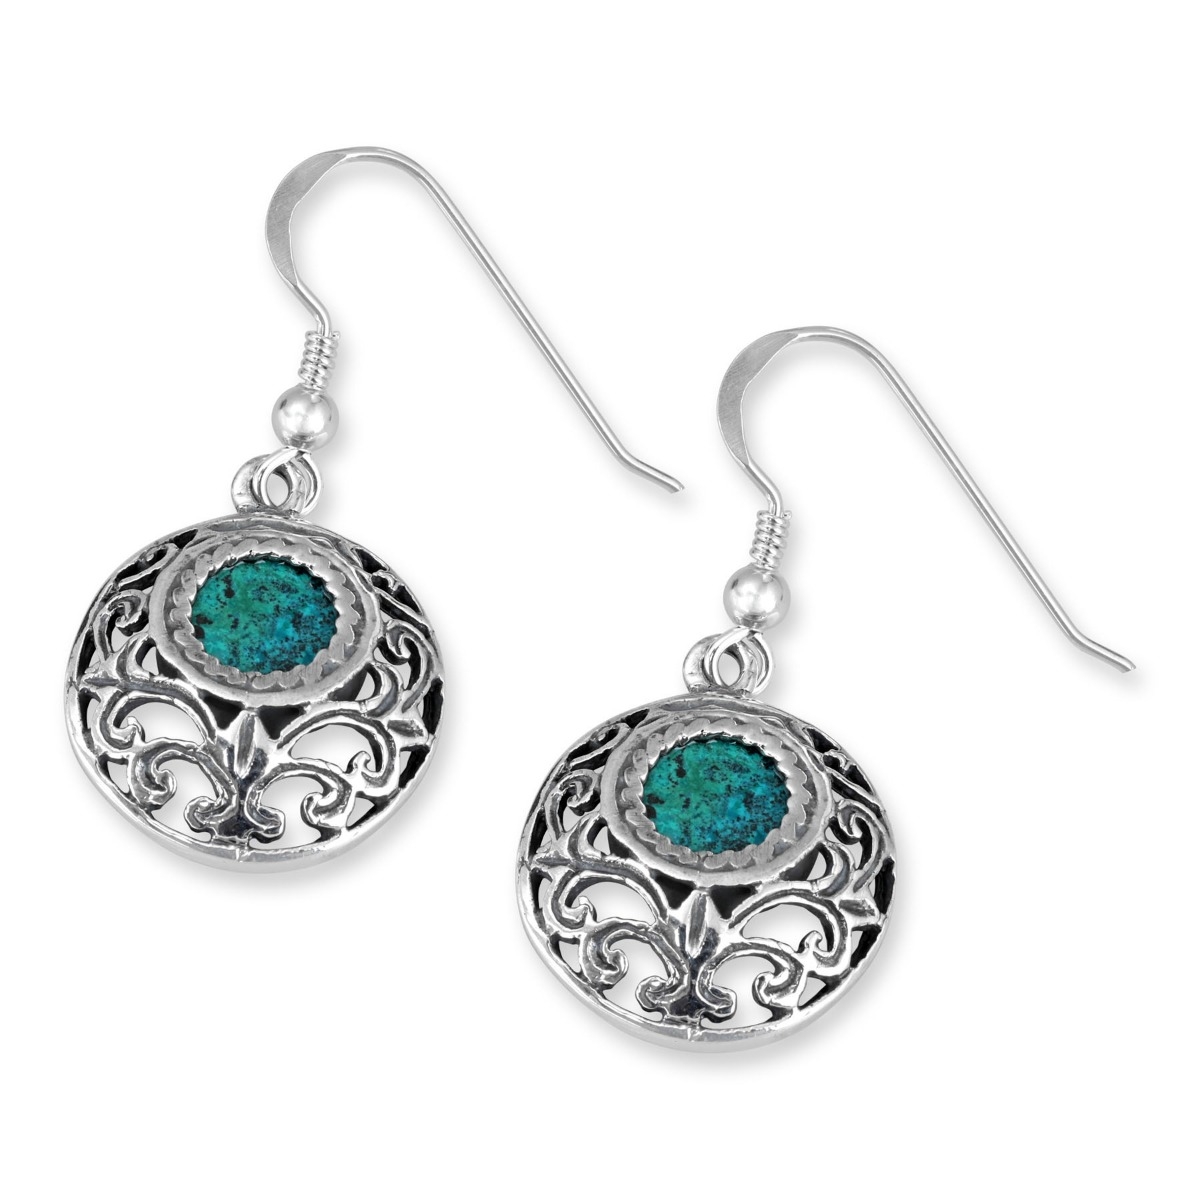 Rafael Jewelry Silver Ball Earrings with Eilat Stone - 1